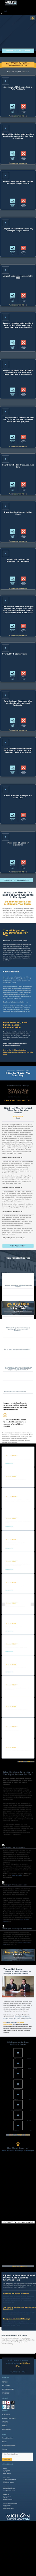 Michigan Auto Law - Grand Rapids MI Lawyers